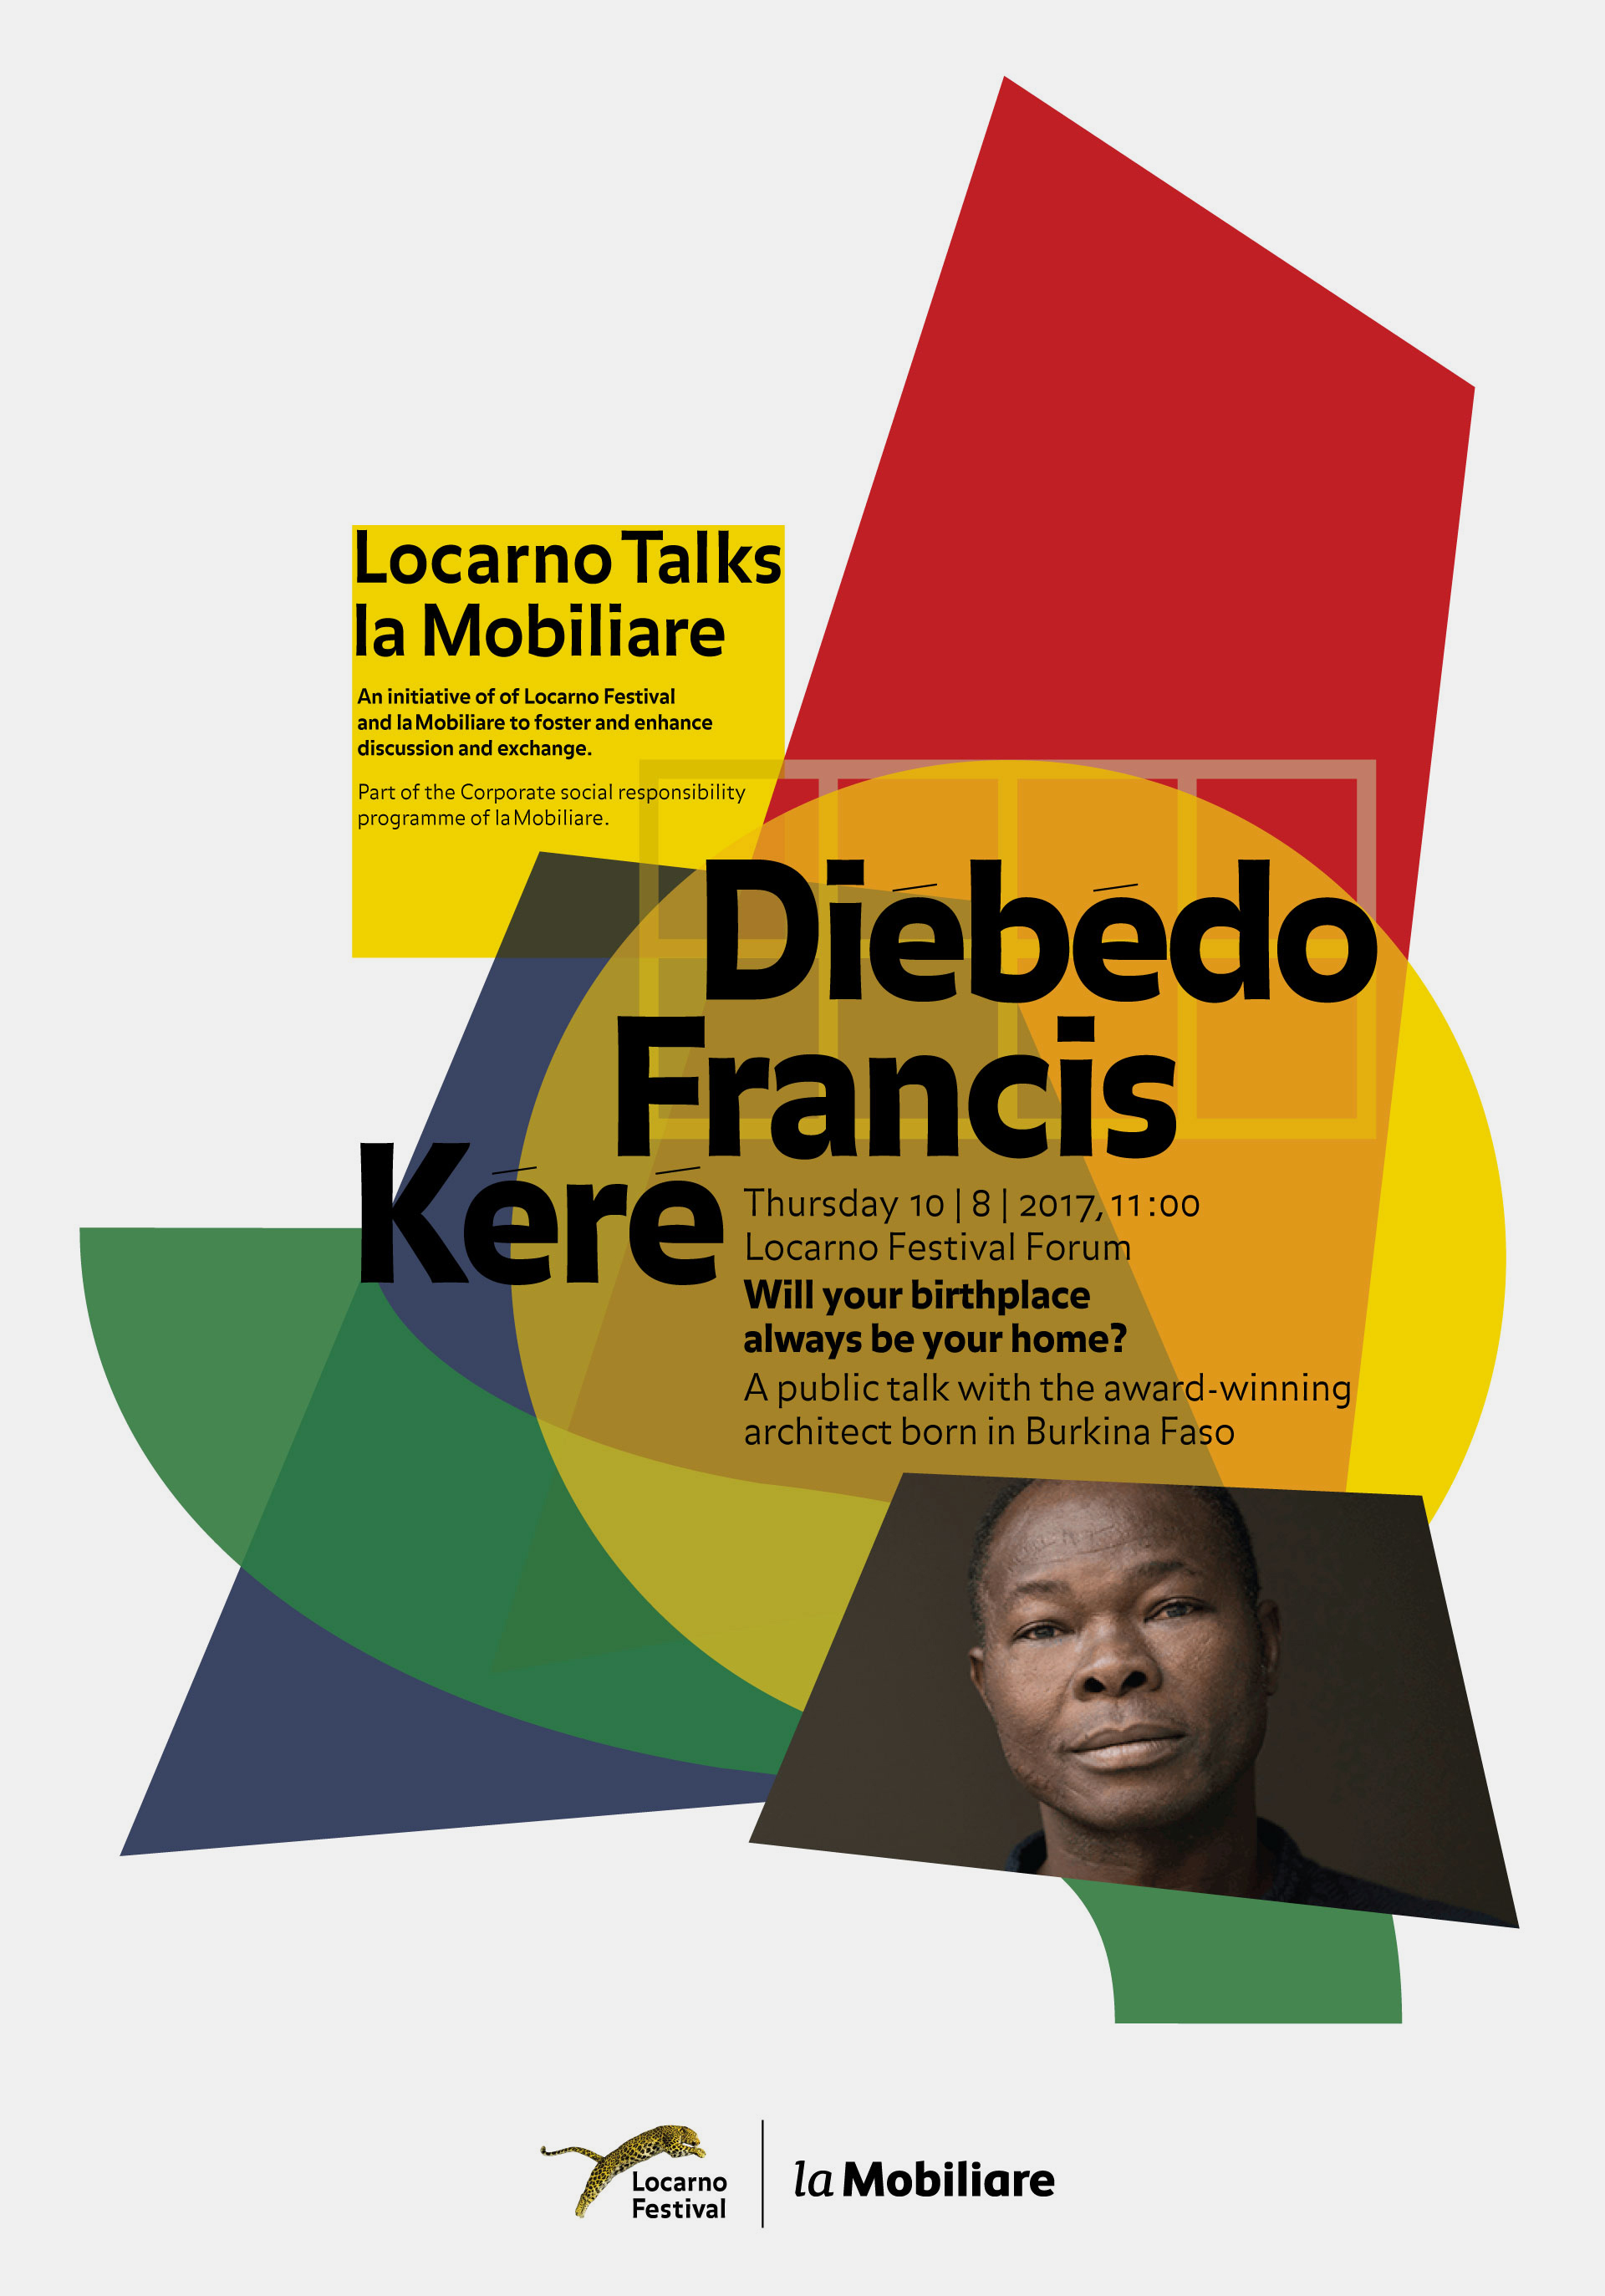 Locarno Talks Francis Kéré